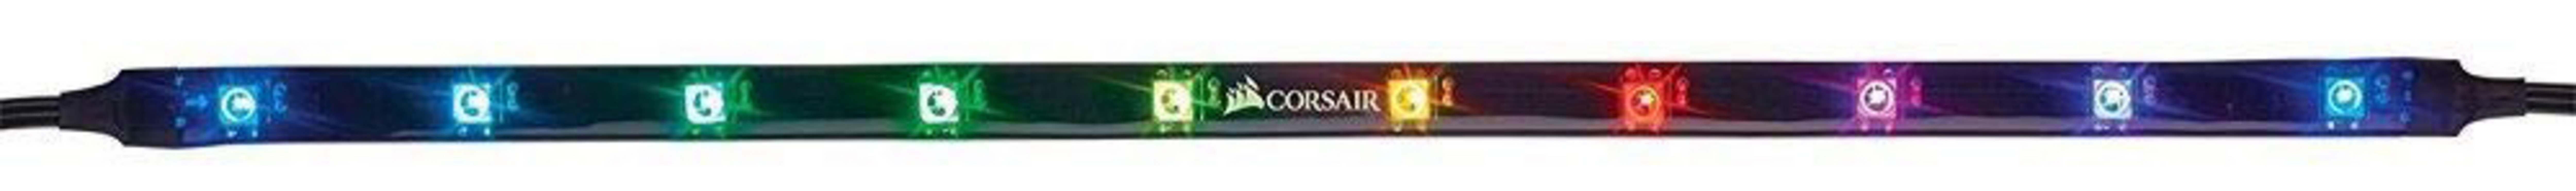 CORSAIR CL-8930002 RGB LED LIGHTING 410 Gehäuseleuchte, KIT, mm EXPANSION PRO